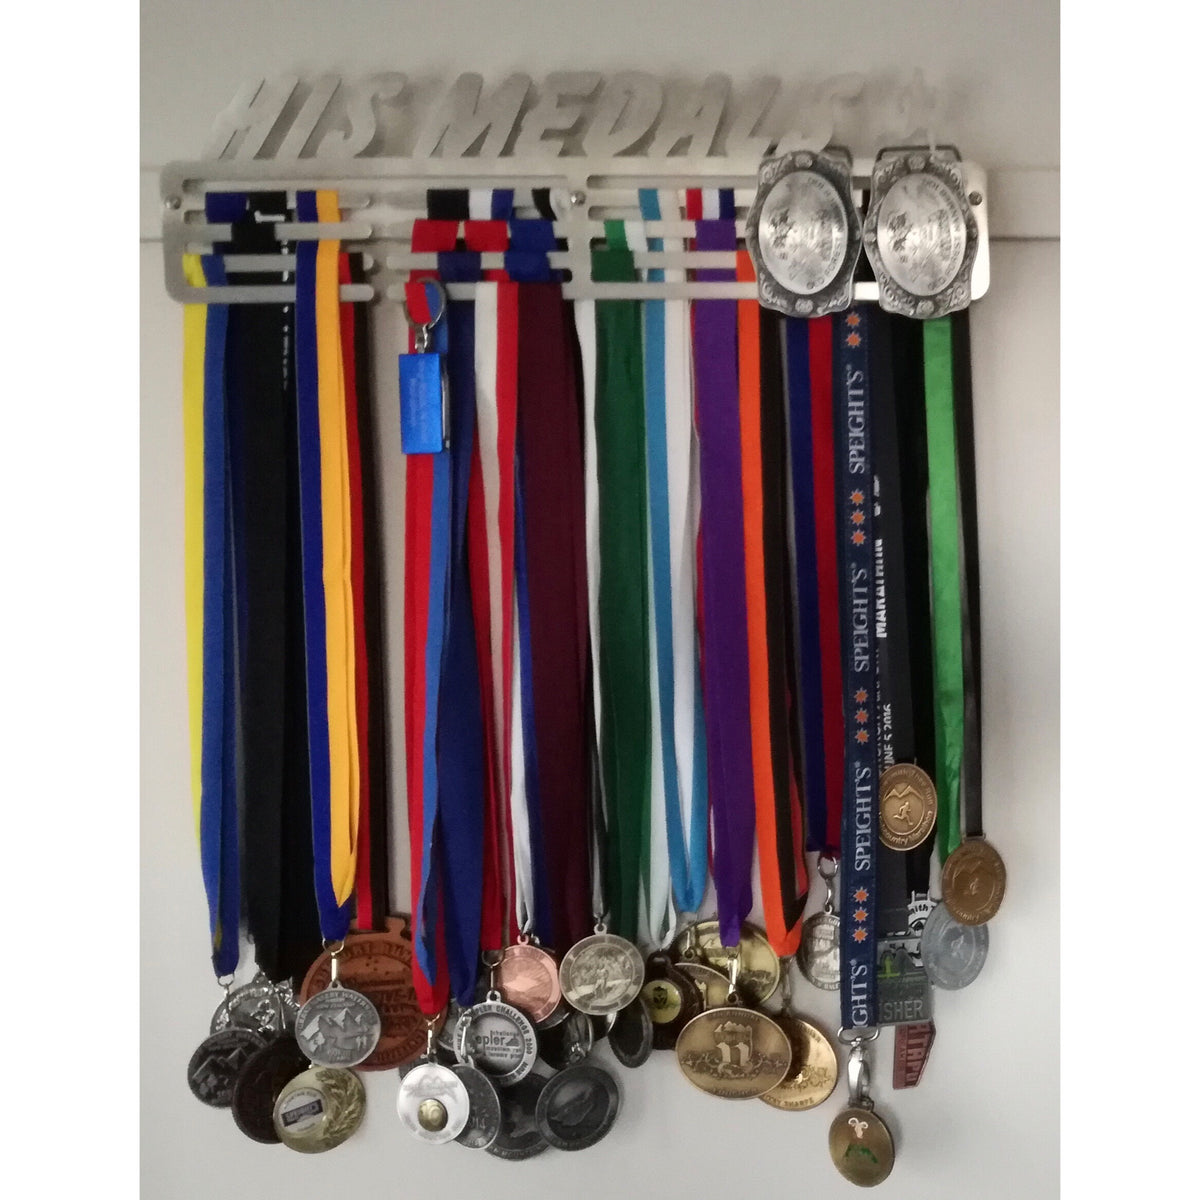 His Medals – Medal Hangers NZ